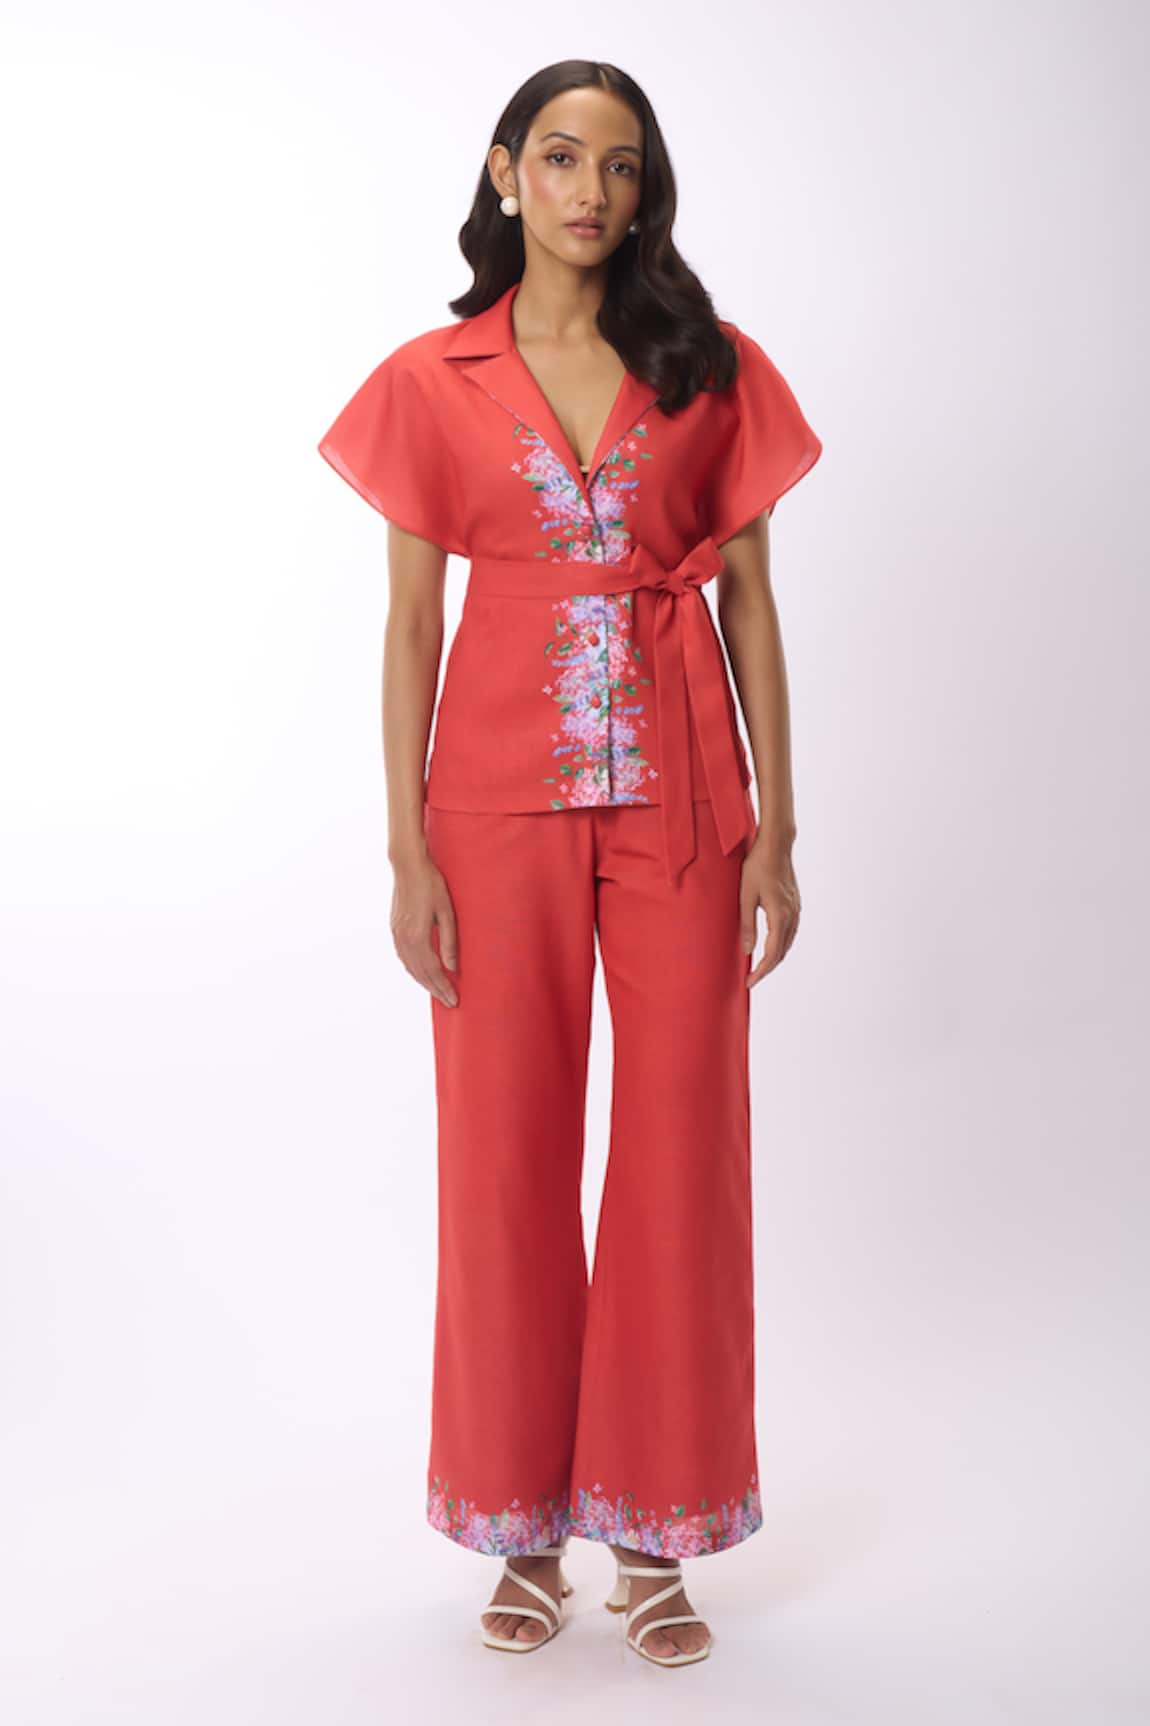 Verano by Tanya Zoella Floral Print Shirt With Belt